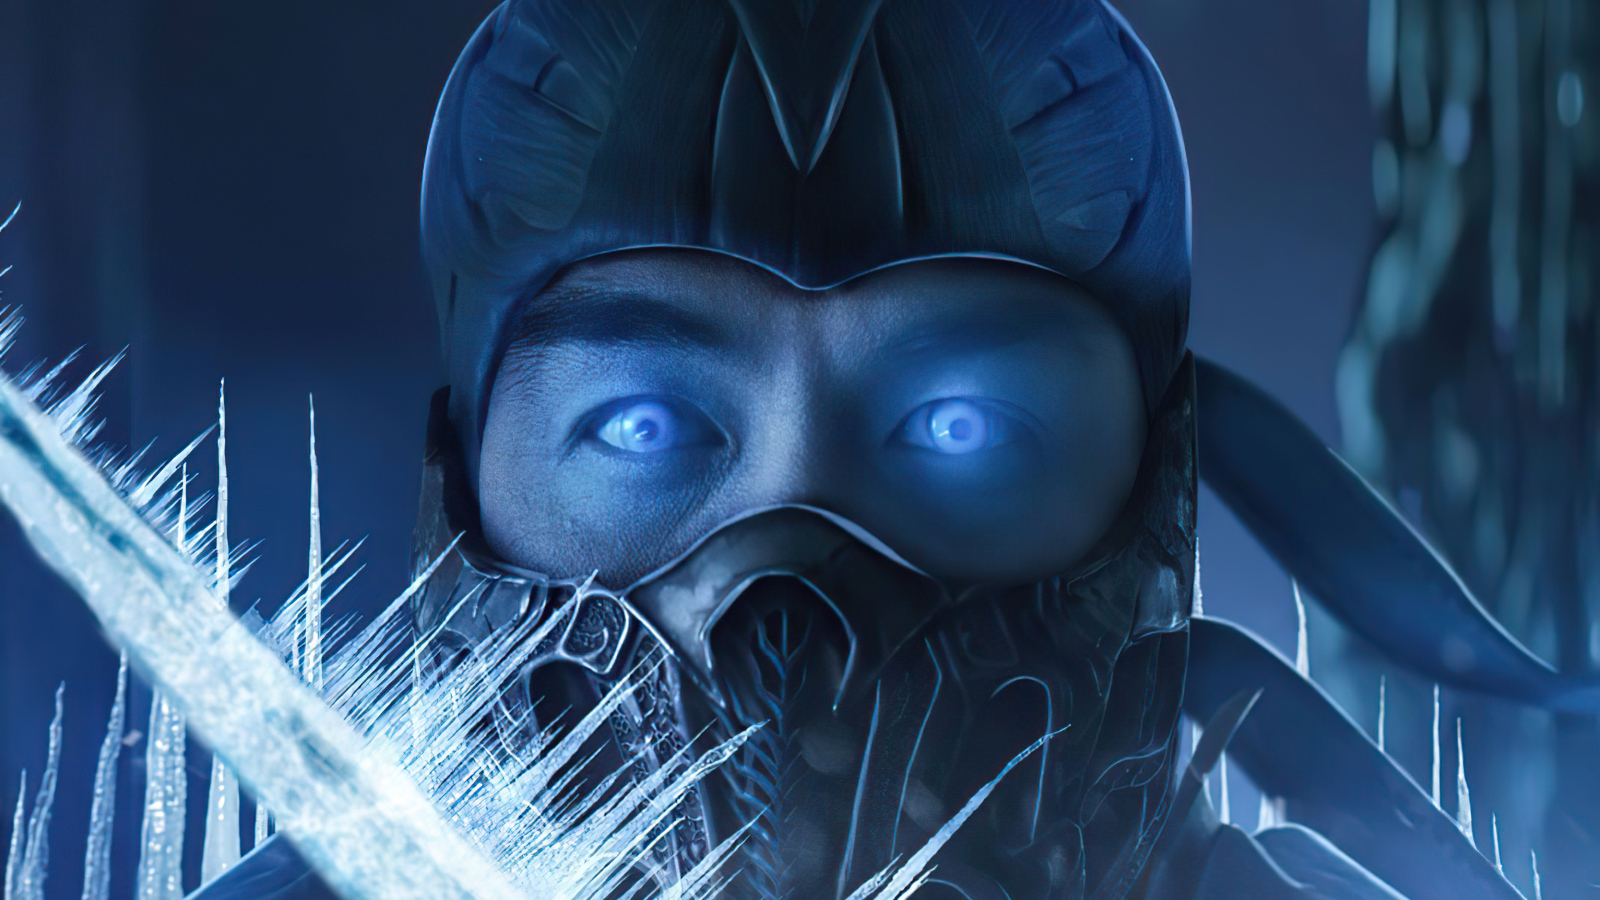 Sub-Zero character in the movie Mortal Kombat, 2021